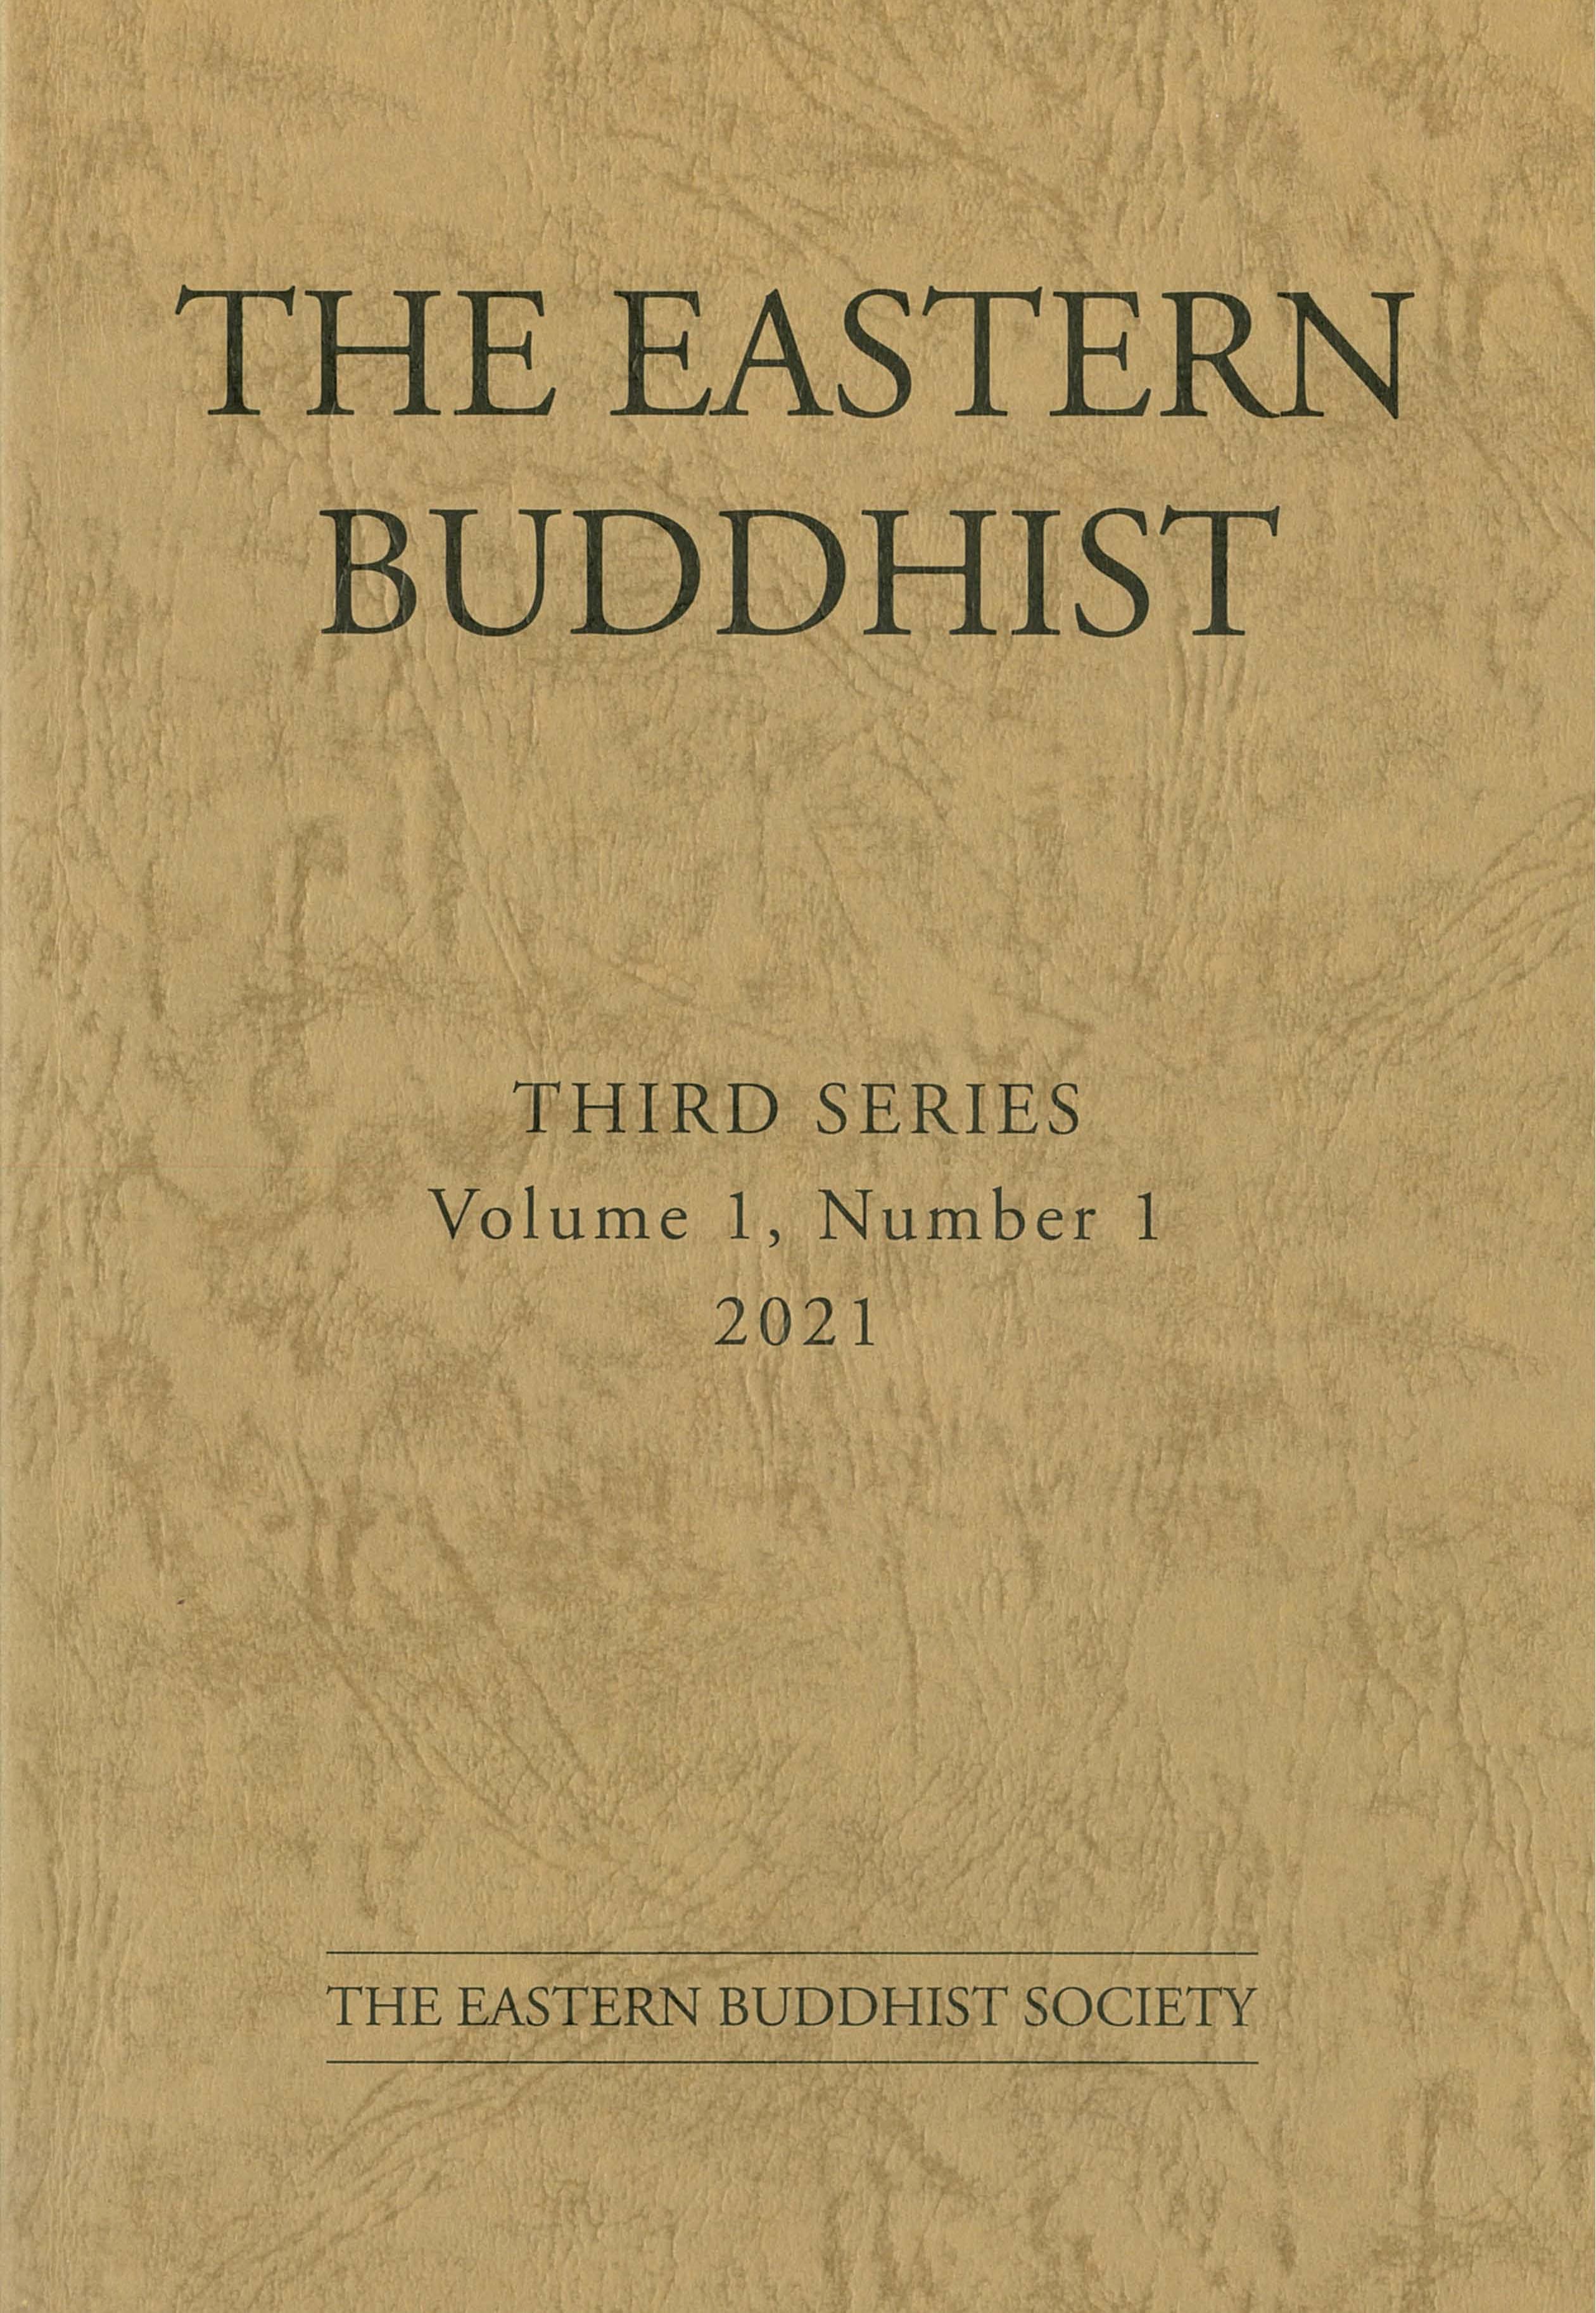 The Eastern Buddhist